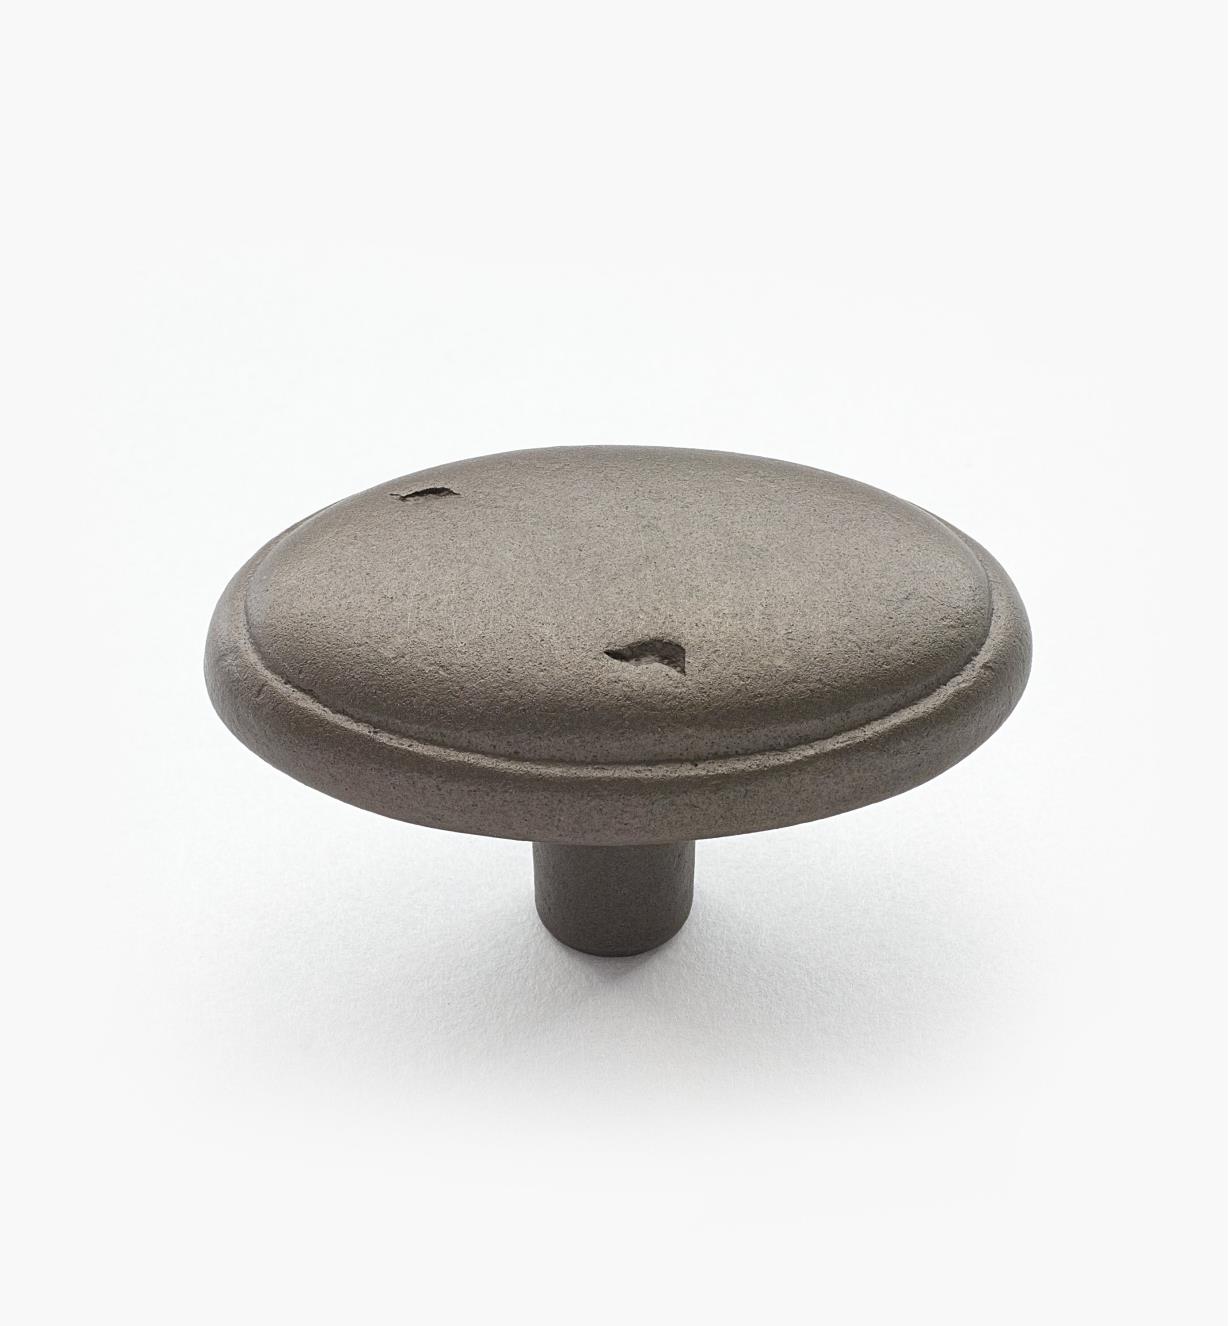 02W4503 - Sierra Suite Small Oval Knob